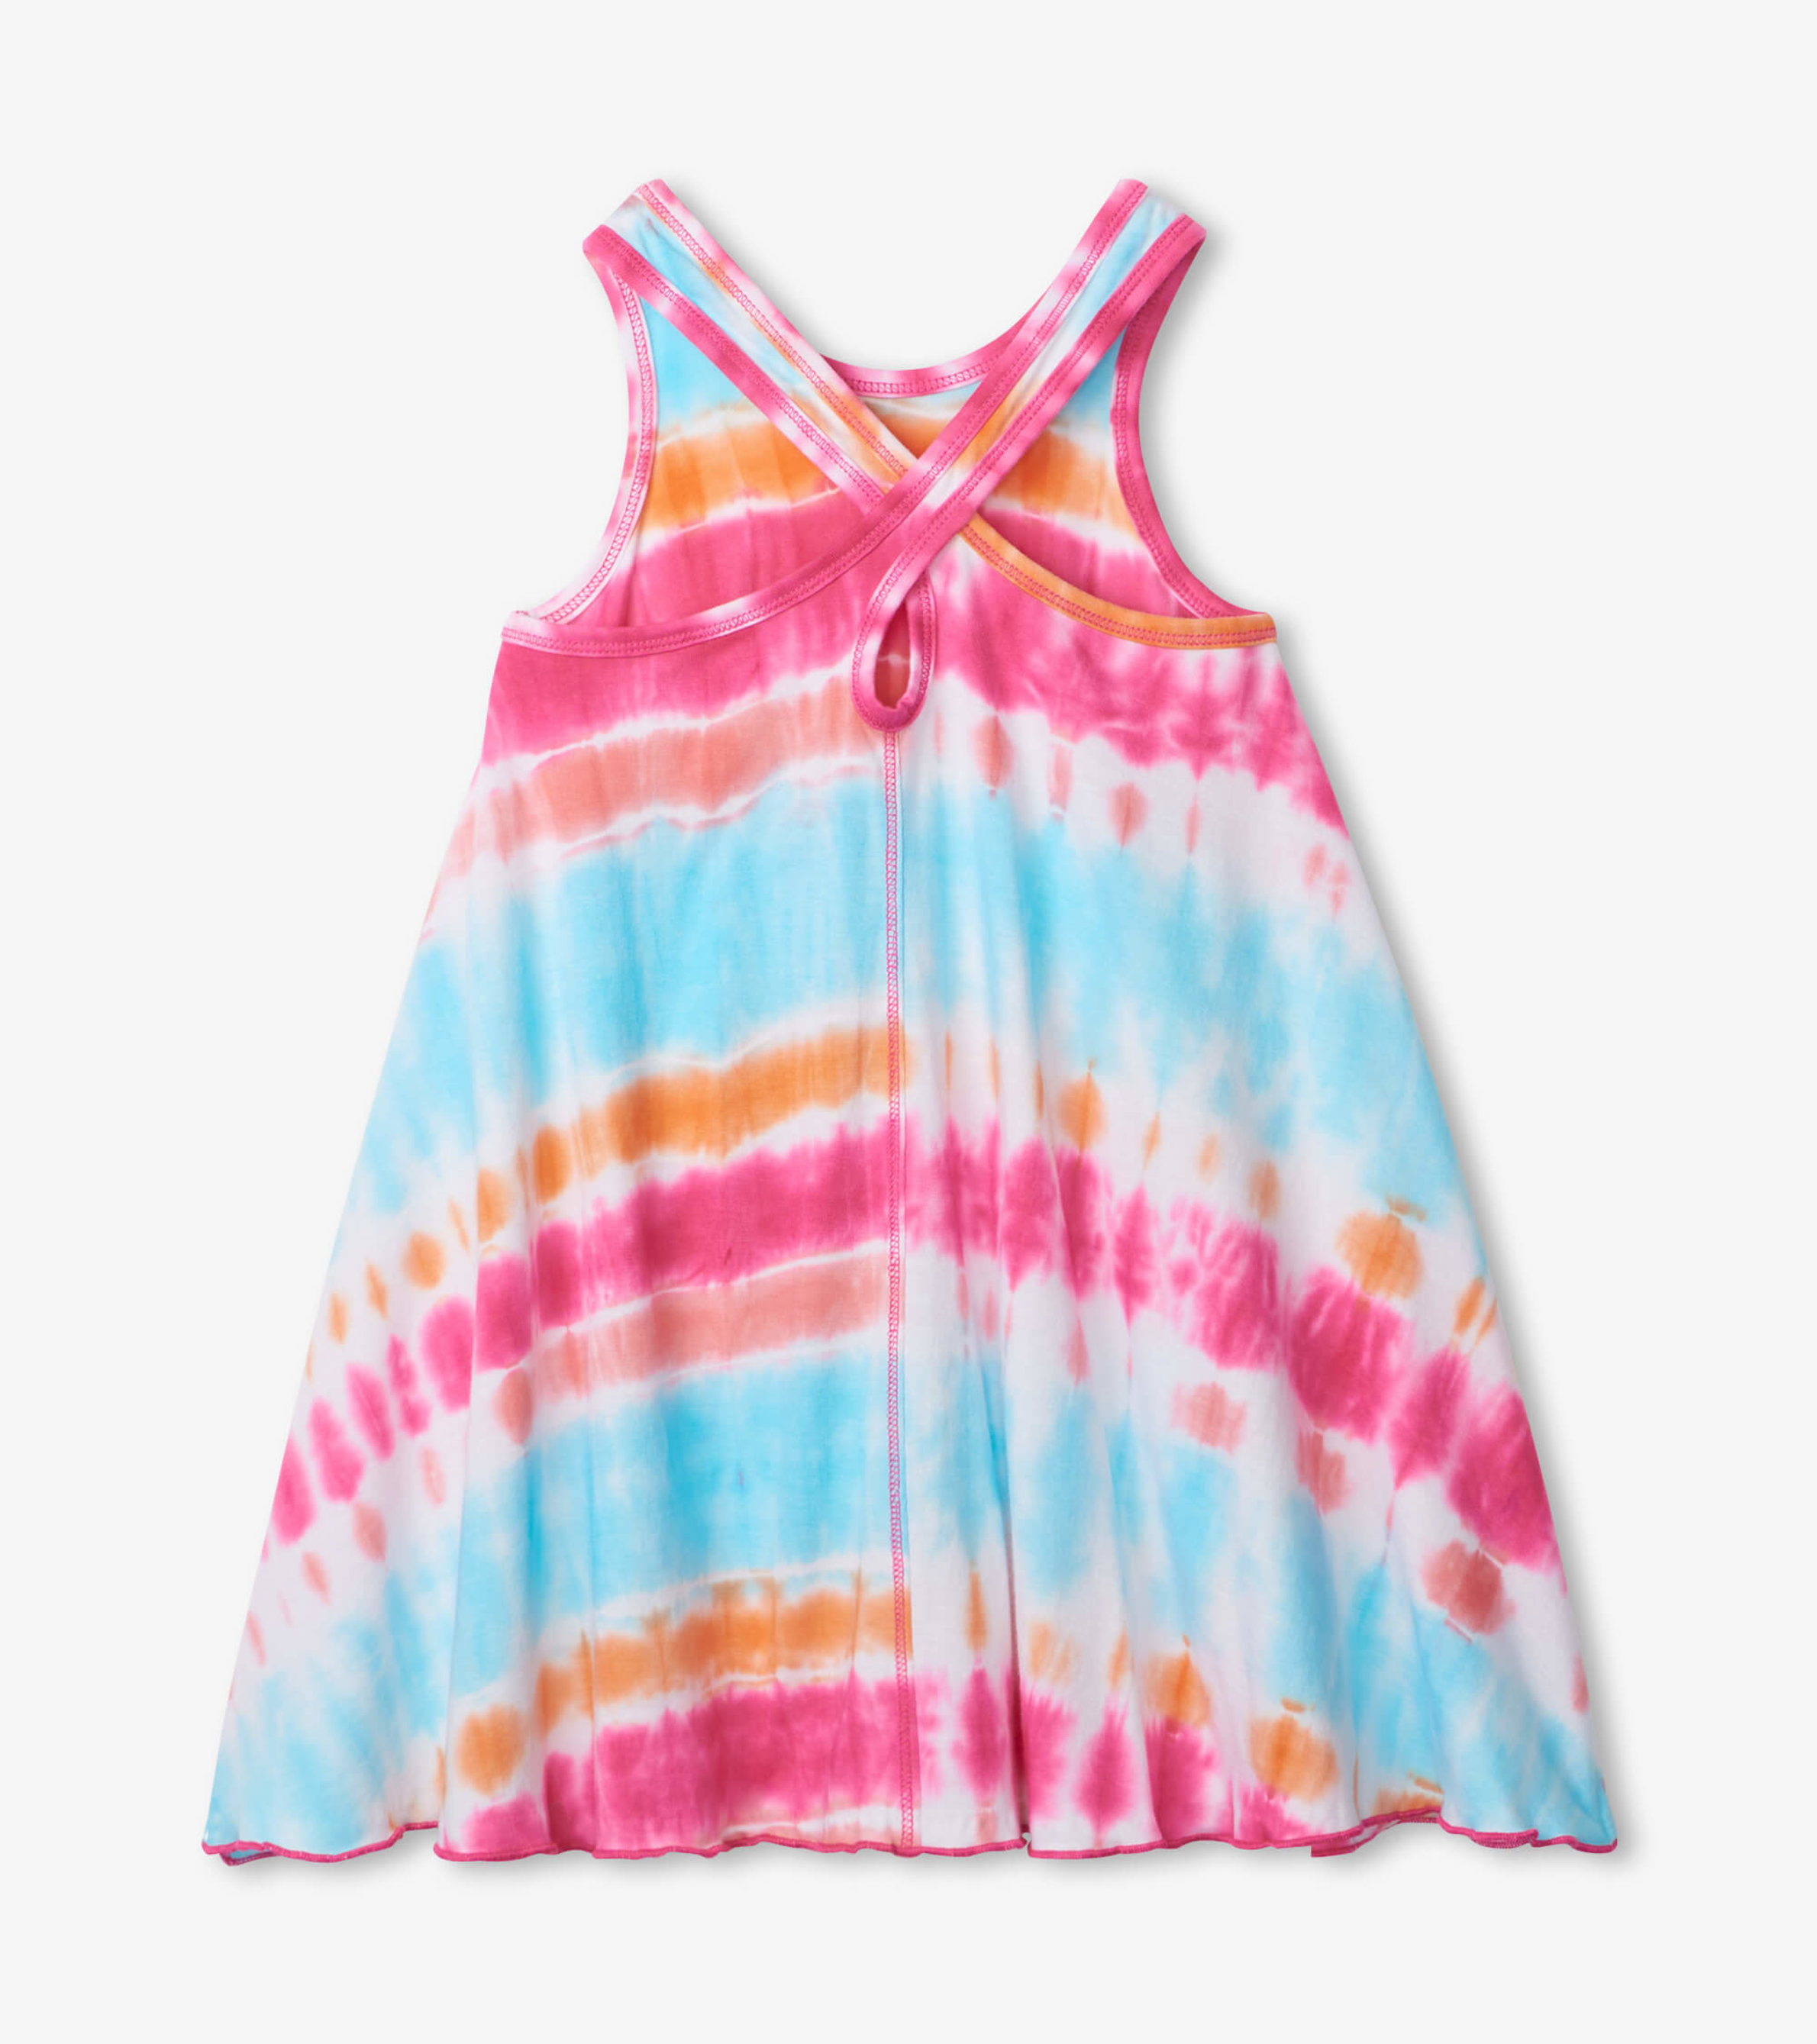 ZCFZJW Kids Little Girls Summer Dress Sleeveless Casual Tie Dye